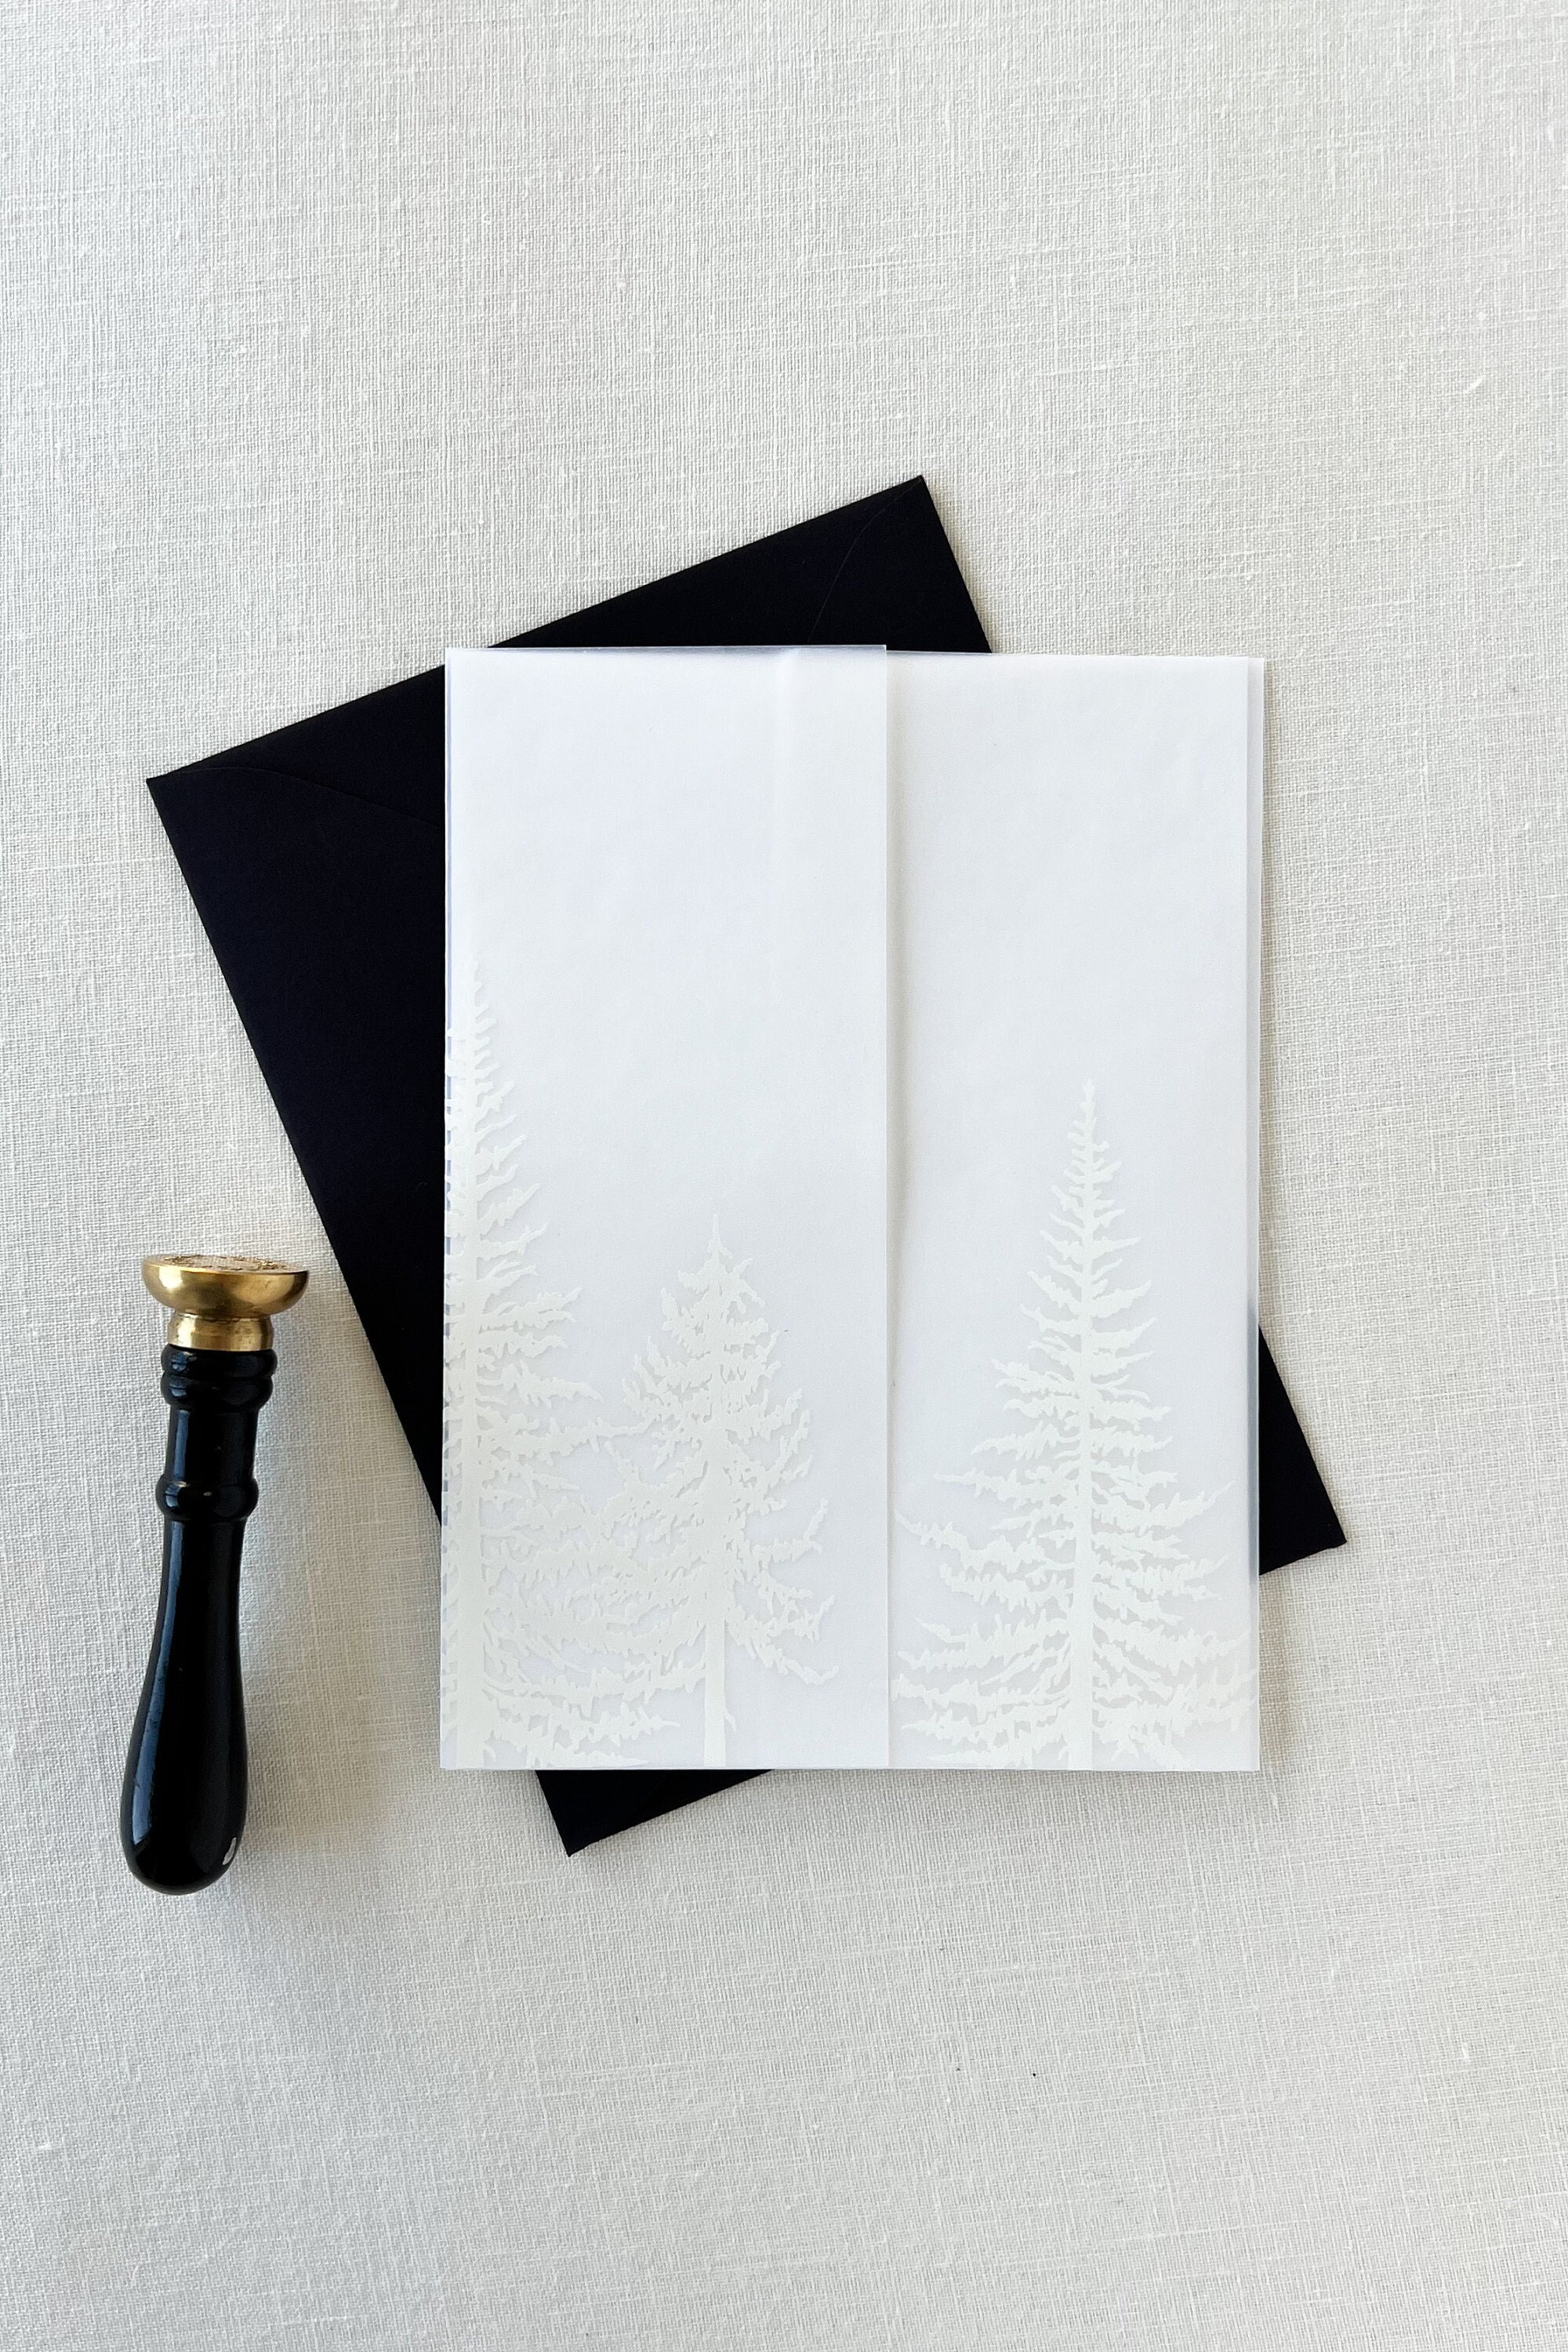 Rustic Wedding Invitation, Vintage Lace - Cotton Willow Design Co.